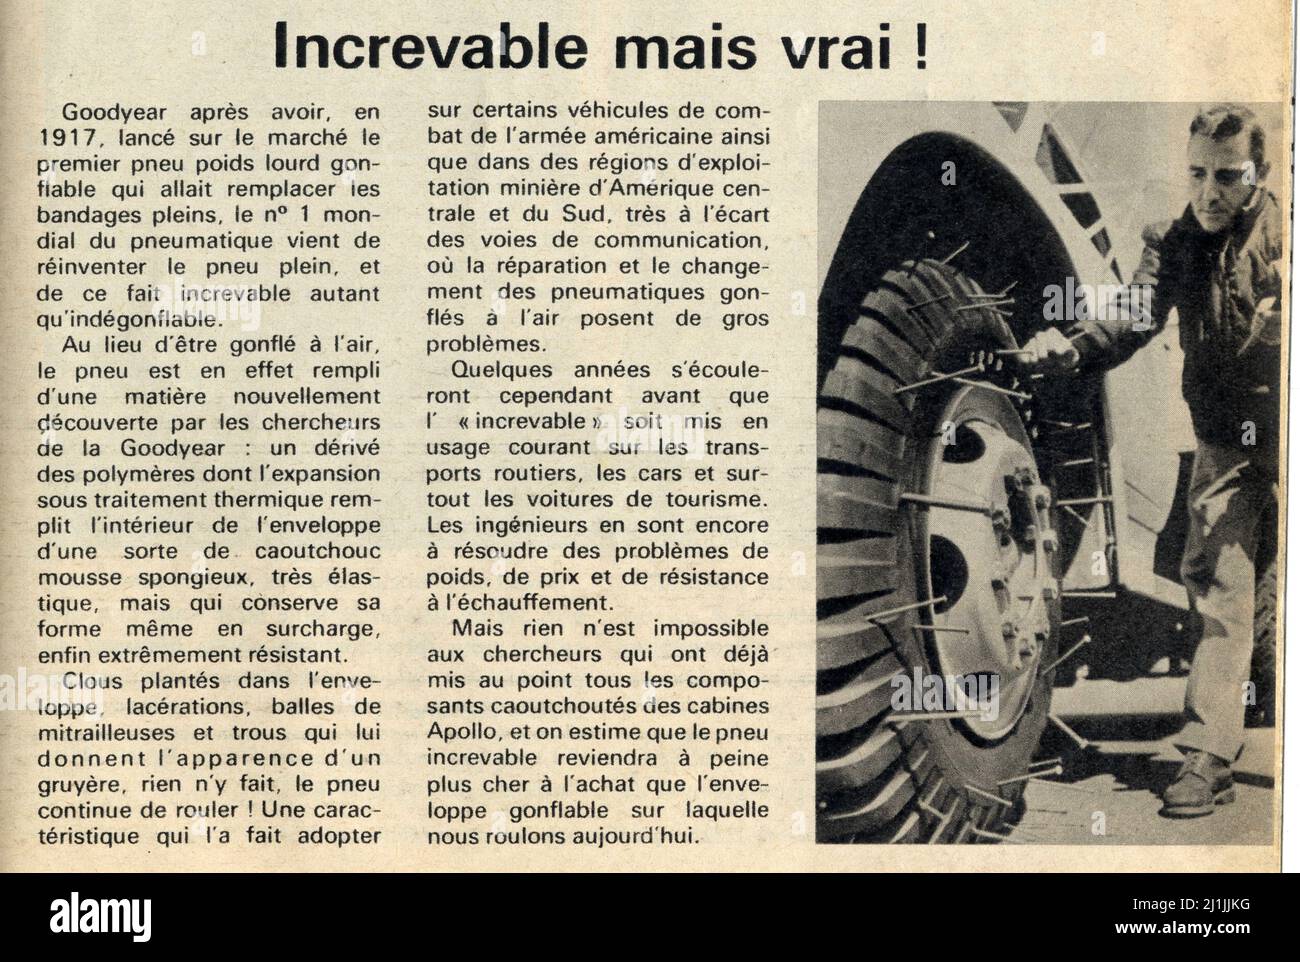 Increable mais vrai! Le pneu Goodyear. 1969 Foto Stock